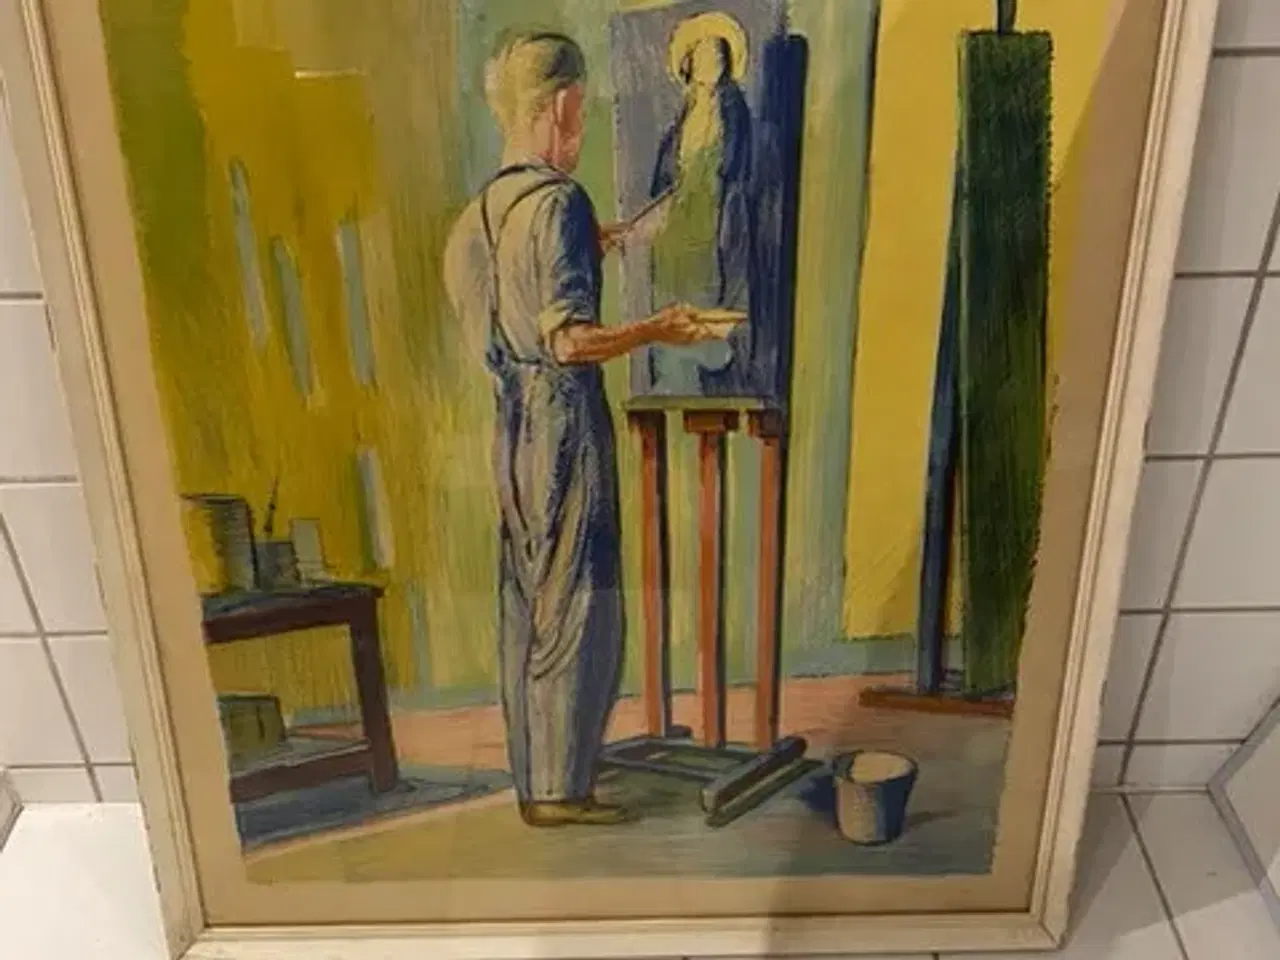 Billede 2 - Staffeli maler - Aksel Jørgensen 1953